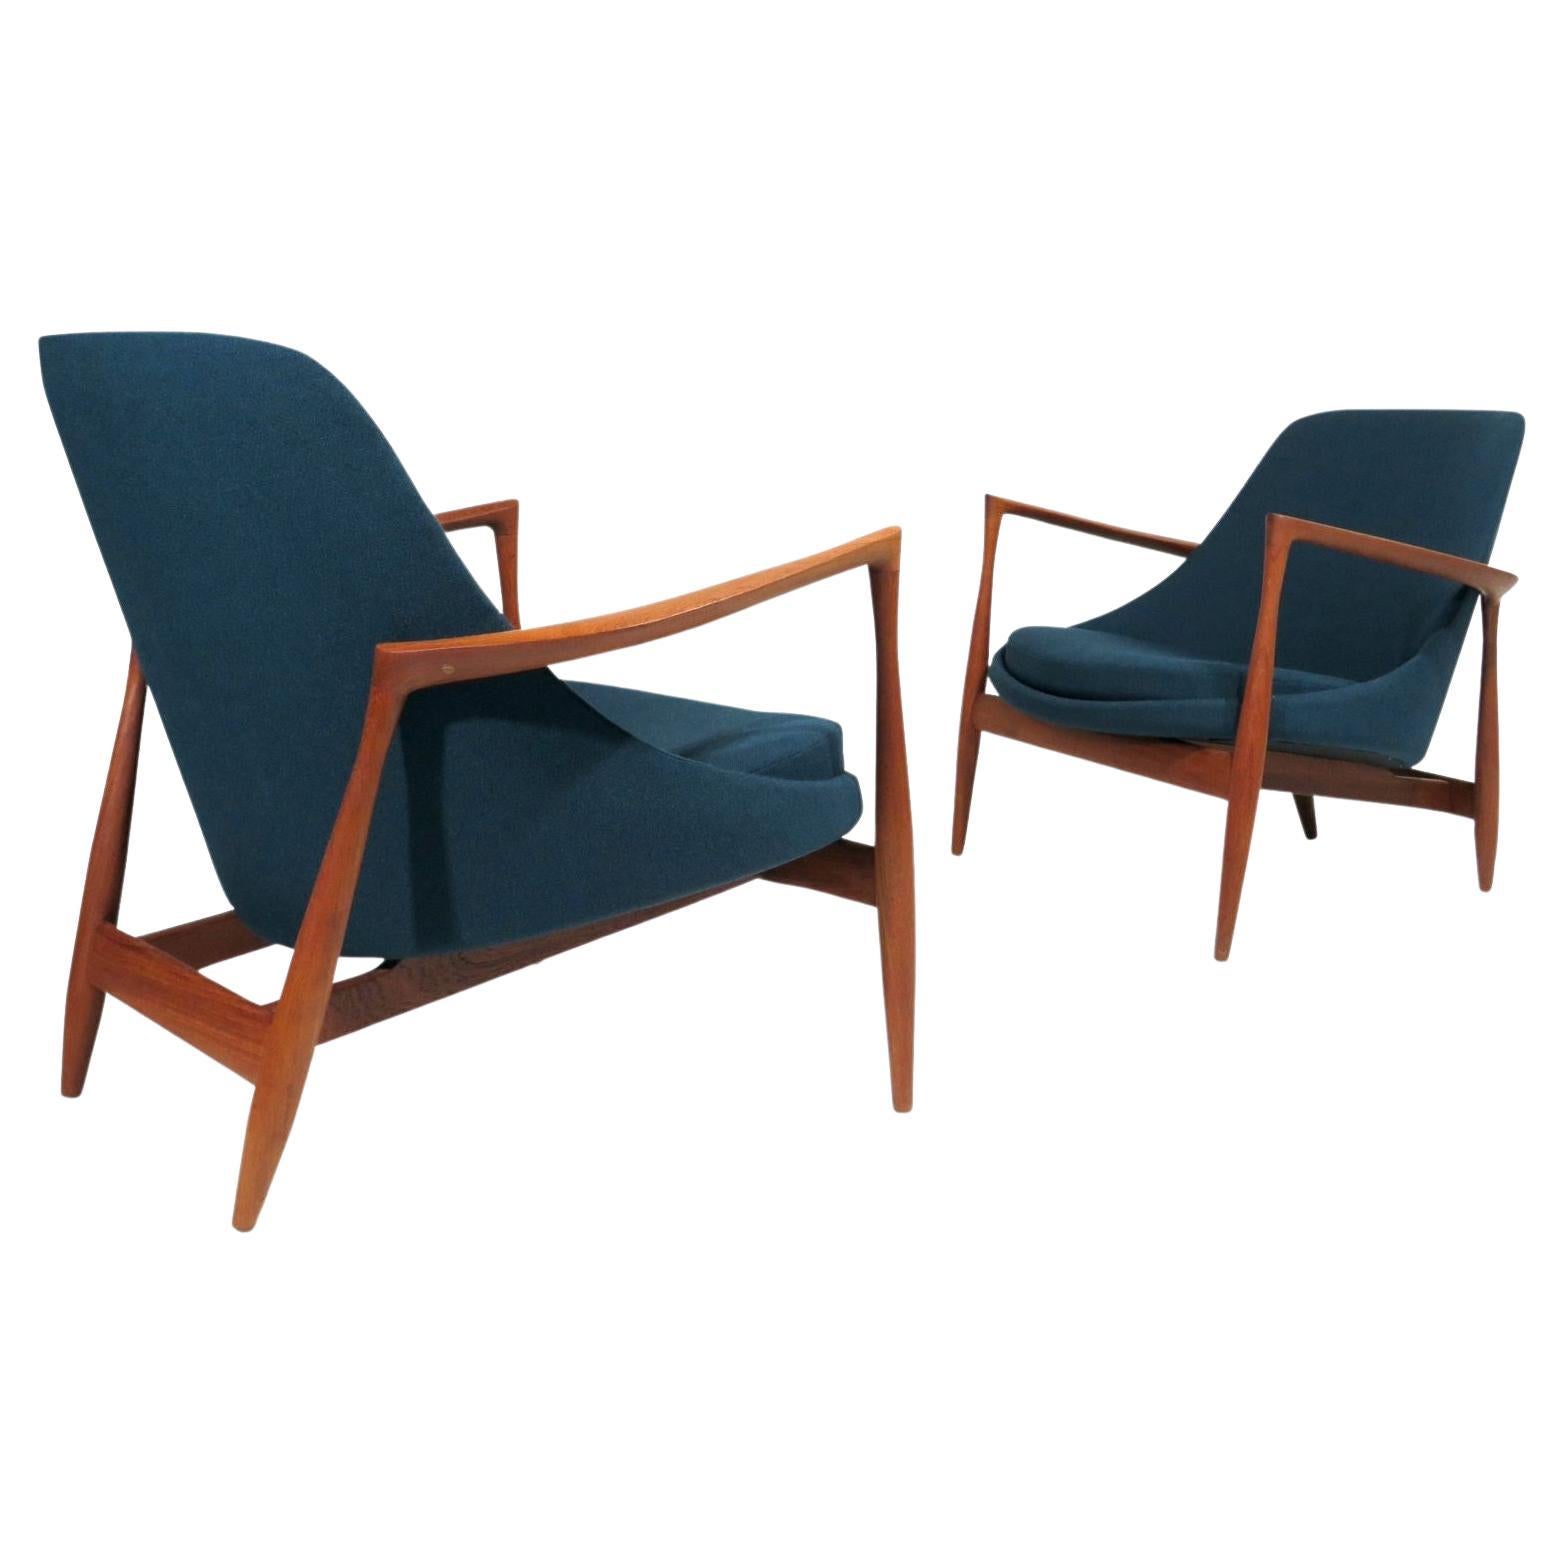 [Queen] Elizabeth Lounge Chairs by IB Kofod Larsen U56